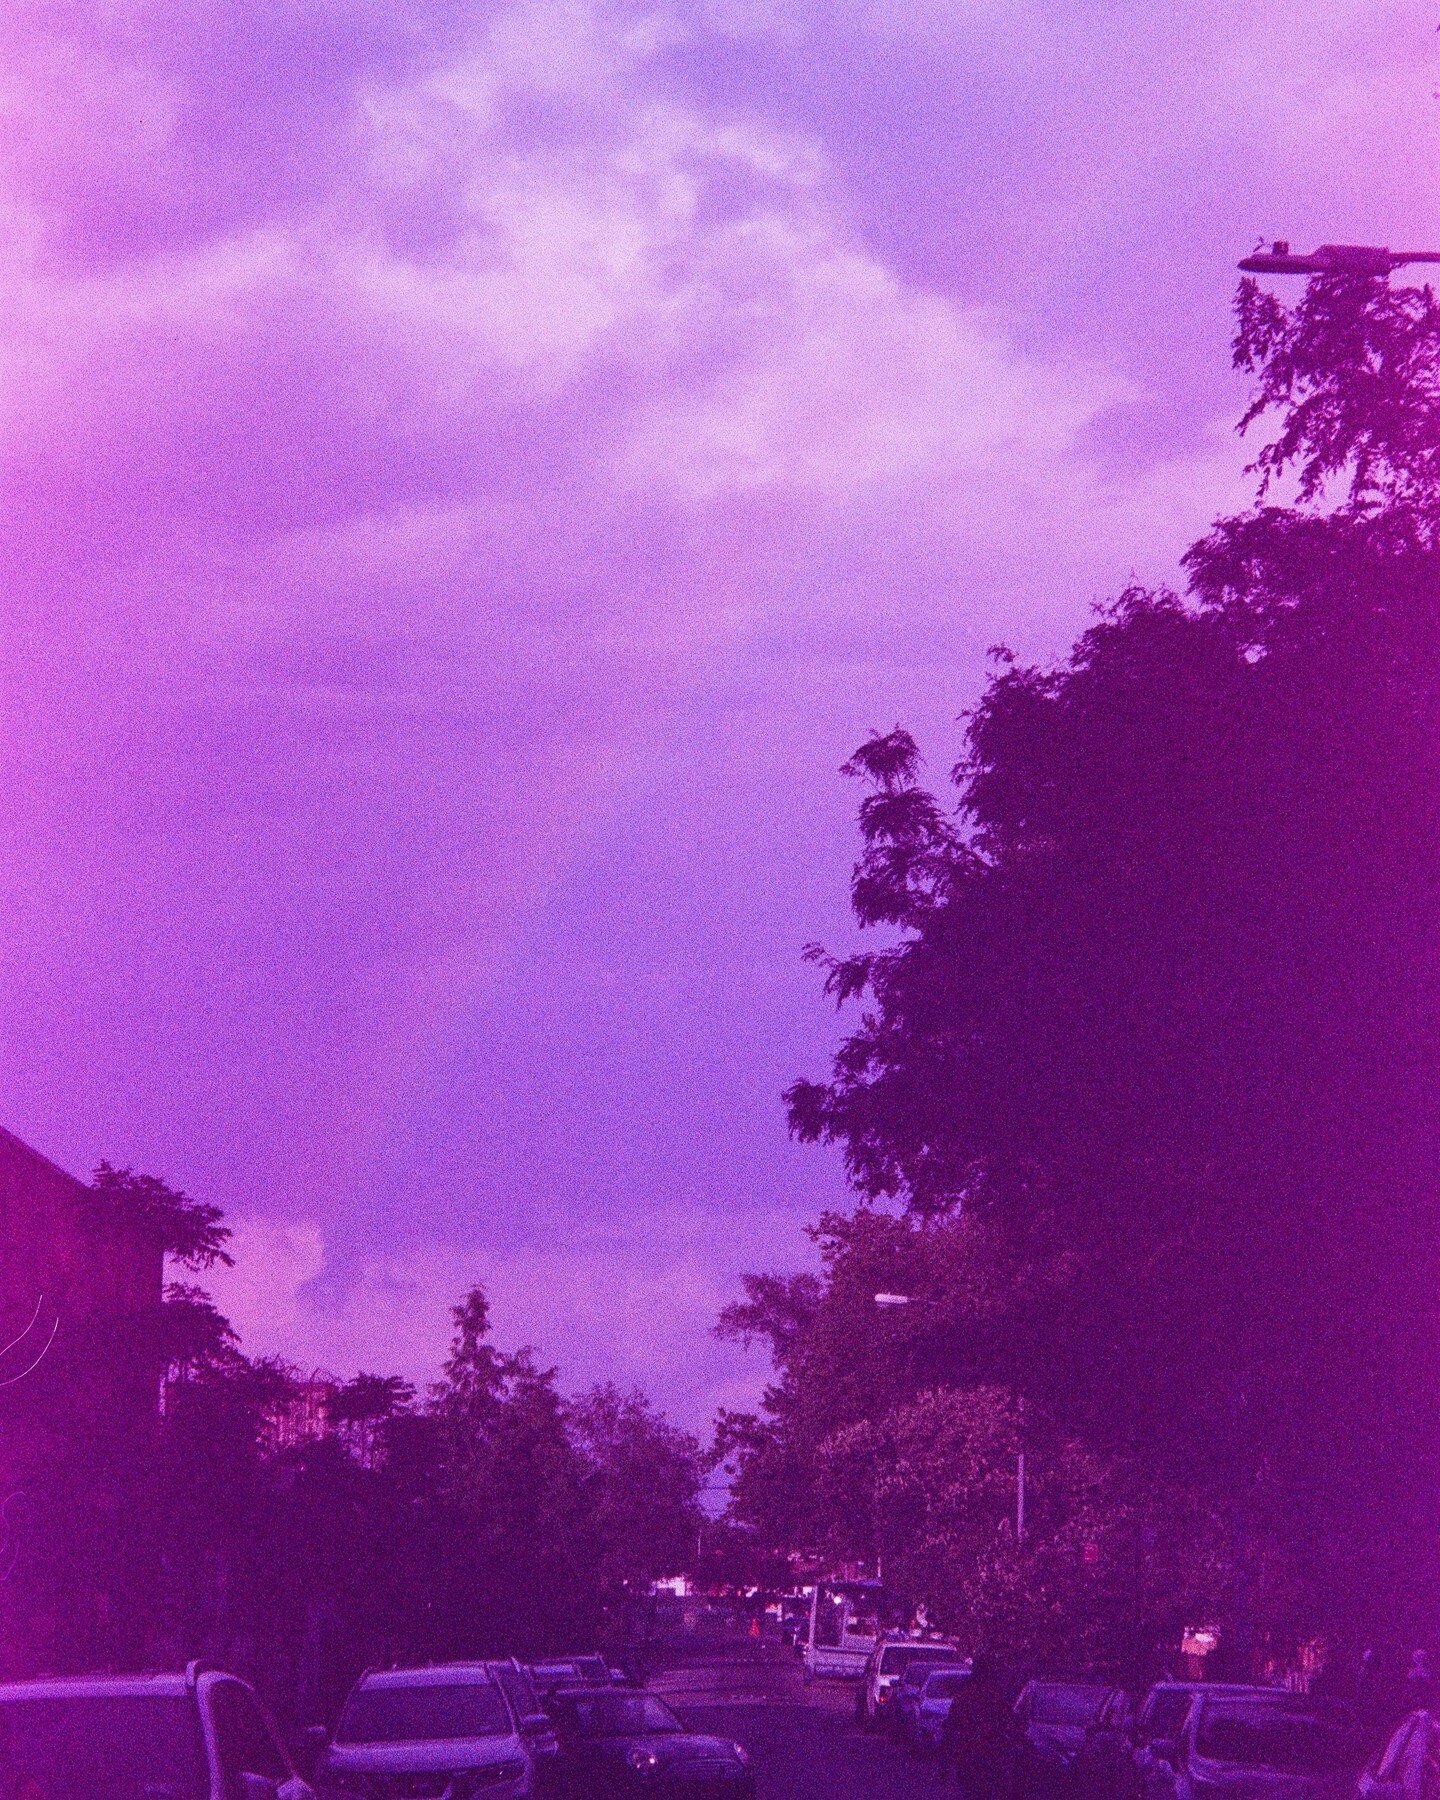 Rainbow in violet